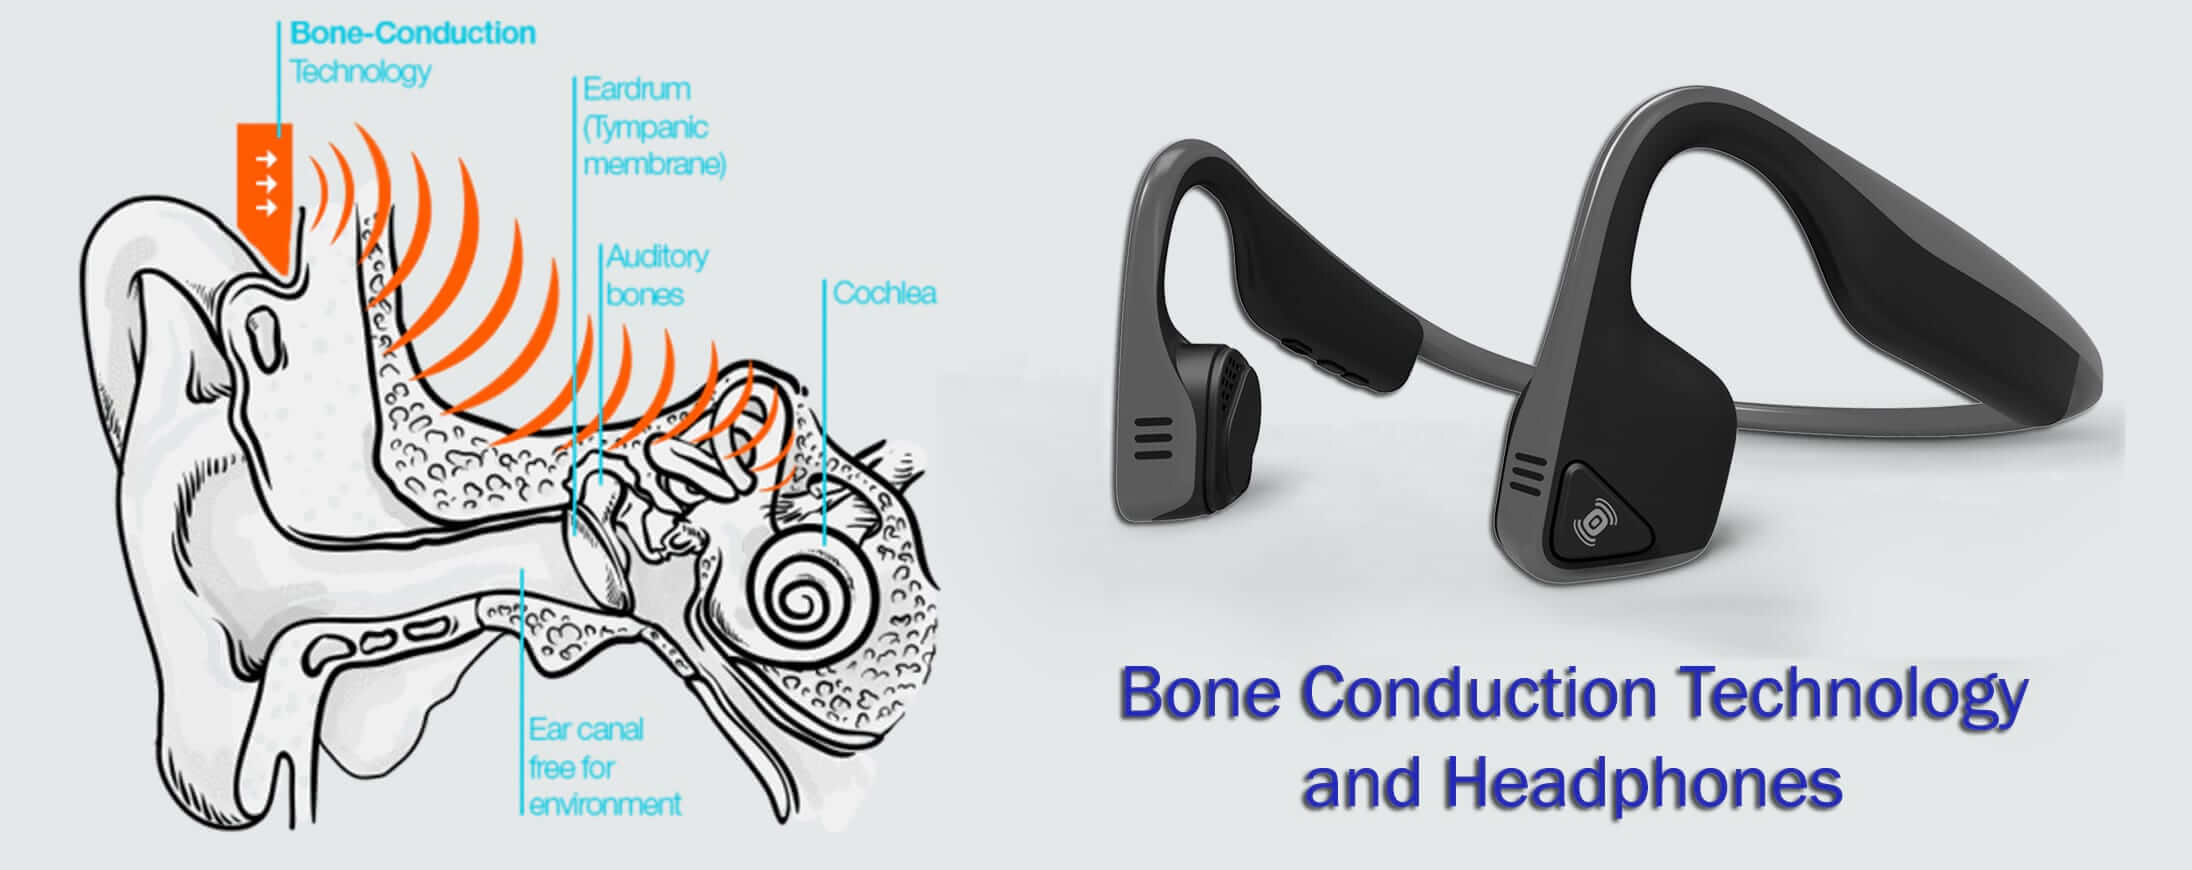 tinhte_bone conduction headphone (3).jpg